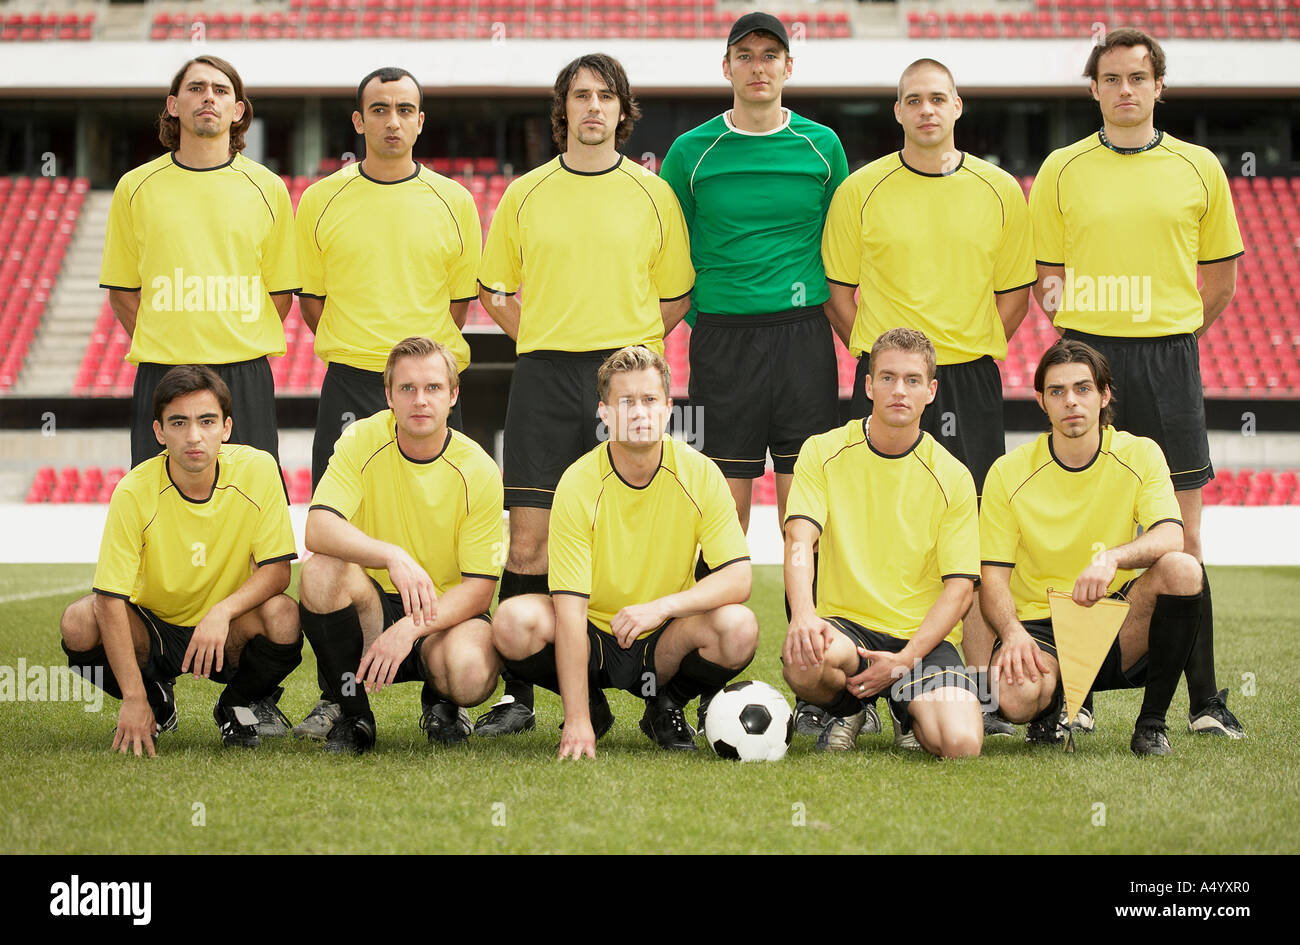 Football team in yellow Stock Photo